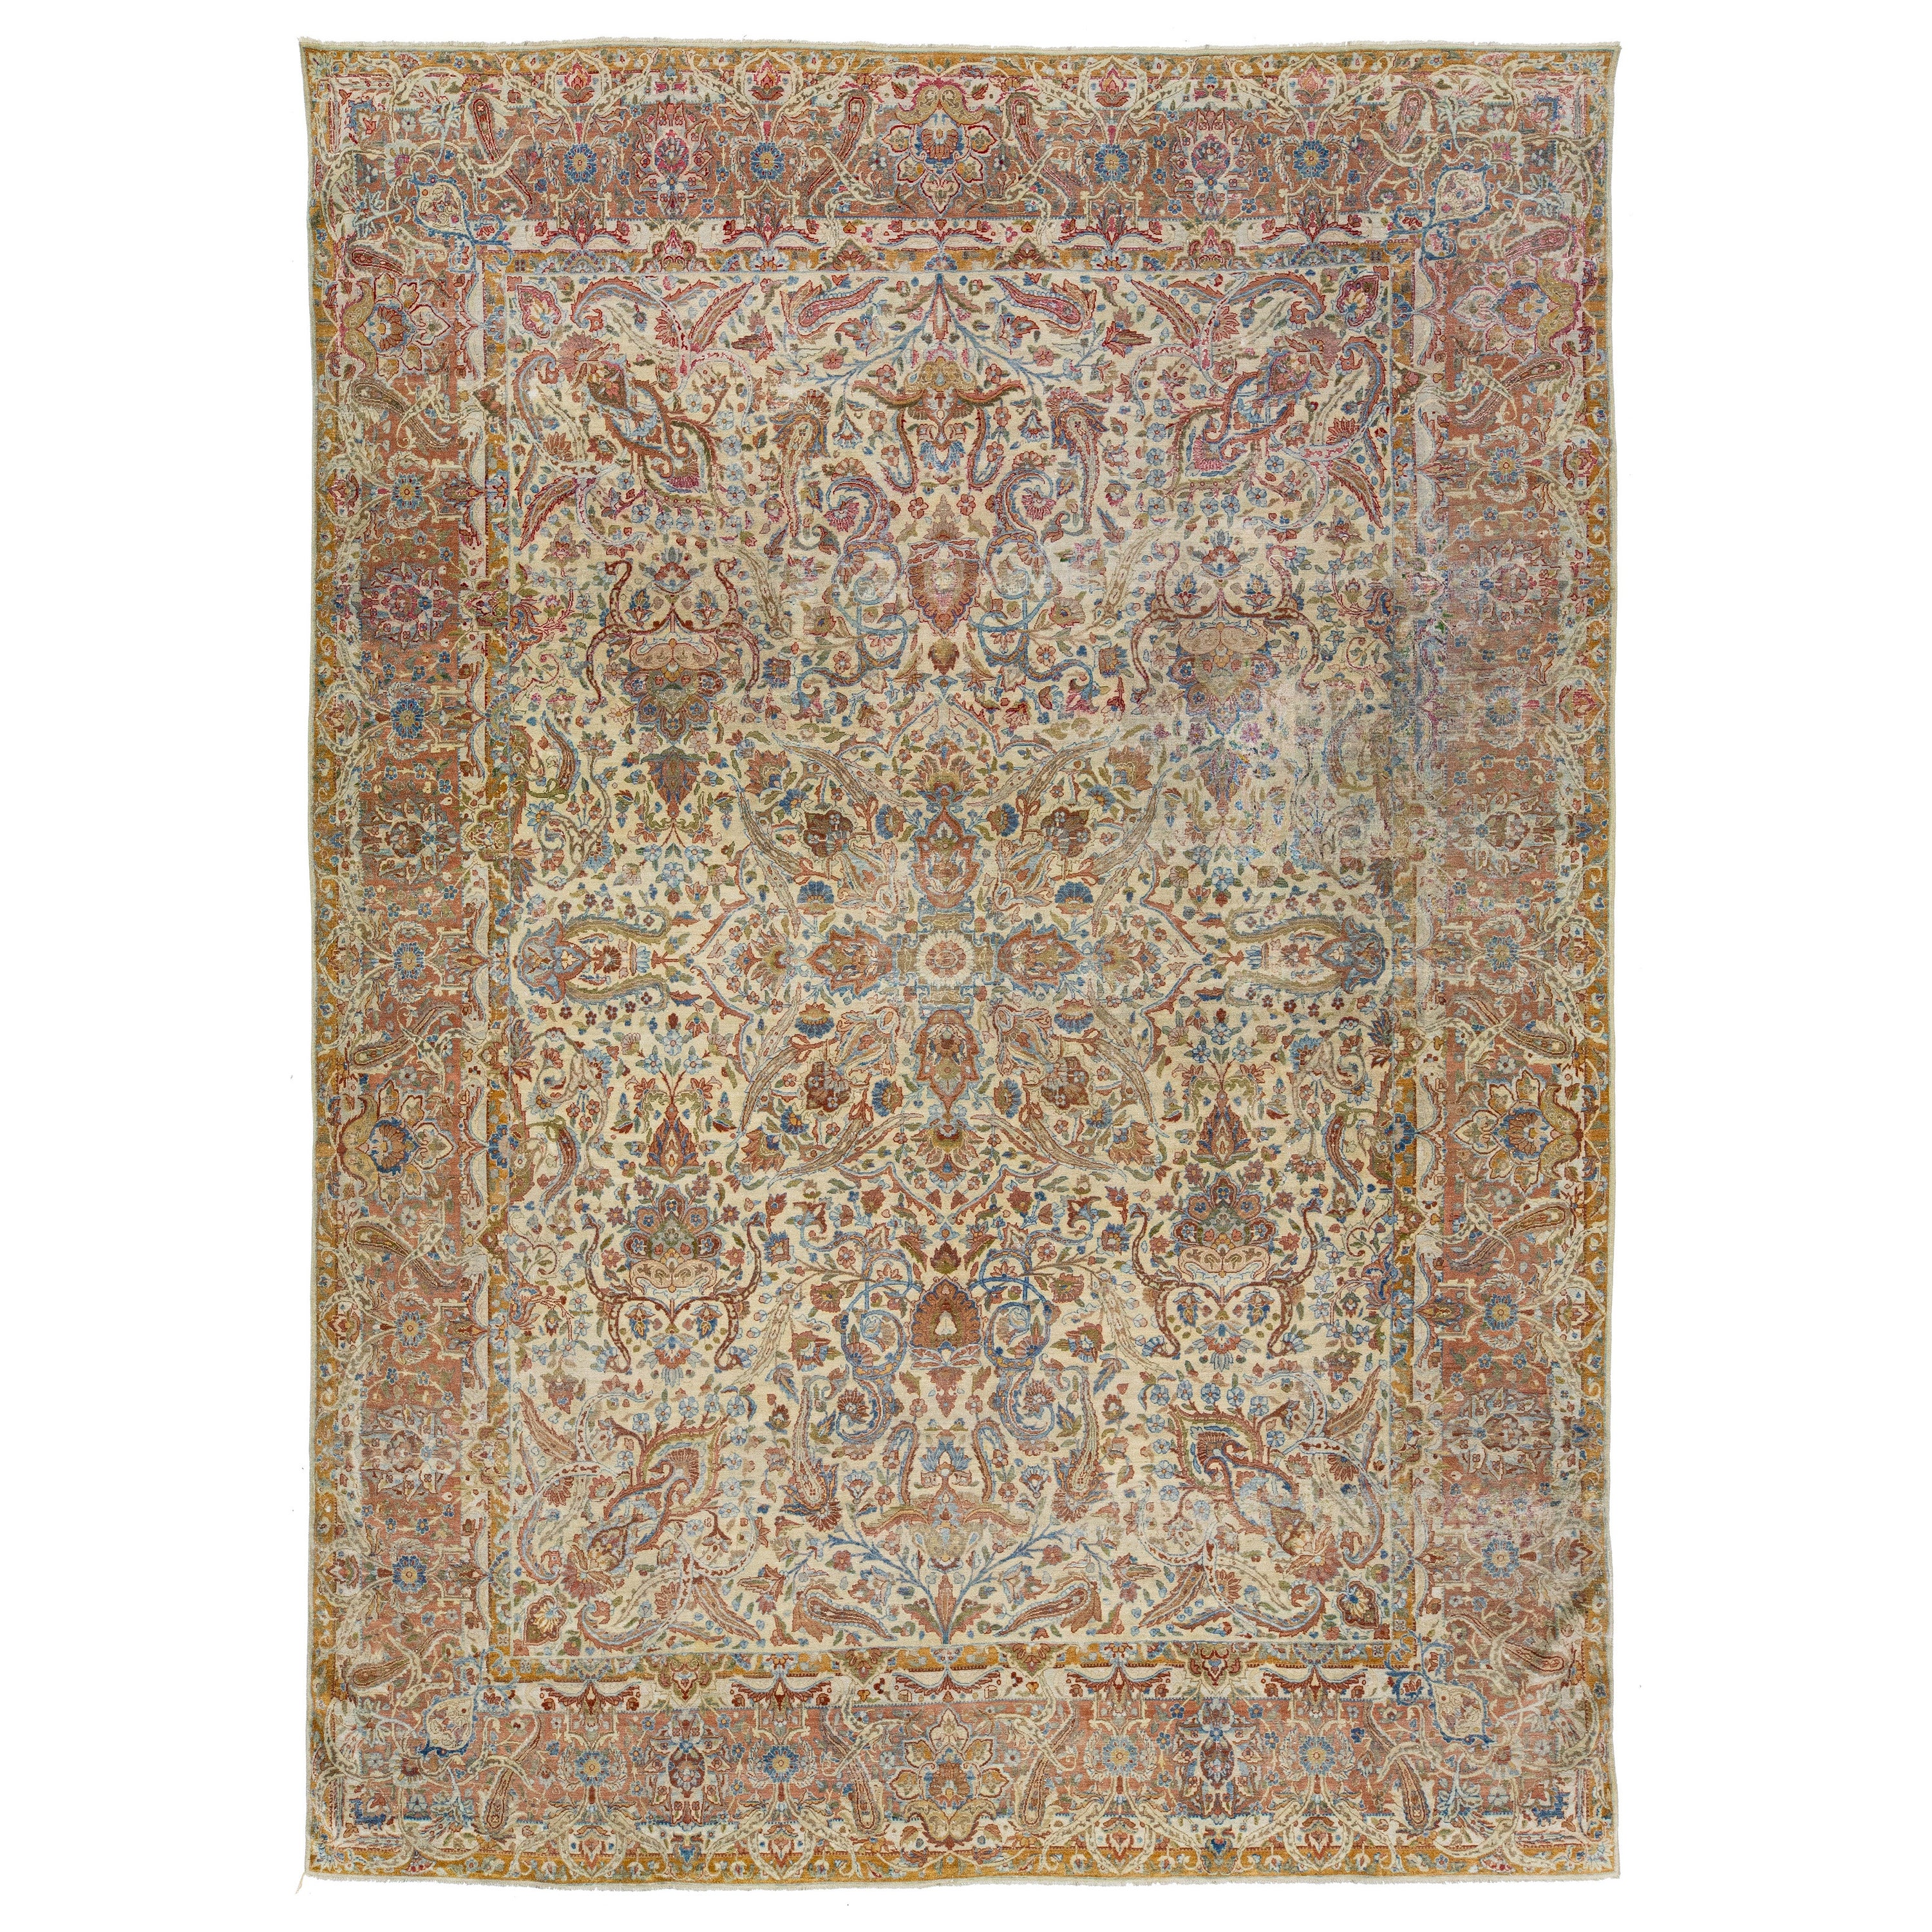 Persian Antique Kerman Handmade Wool Rug with Multicolor Floral Design